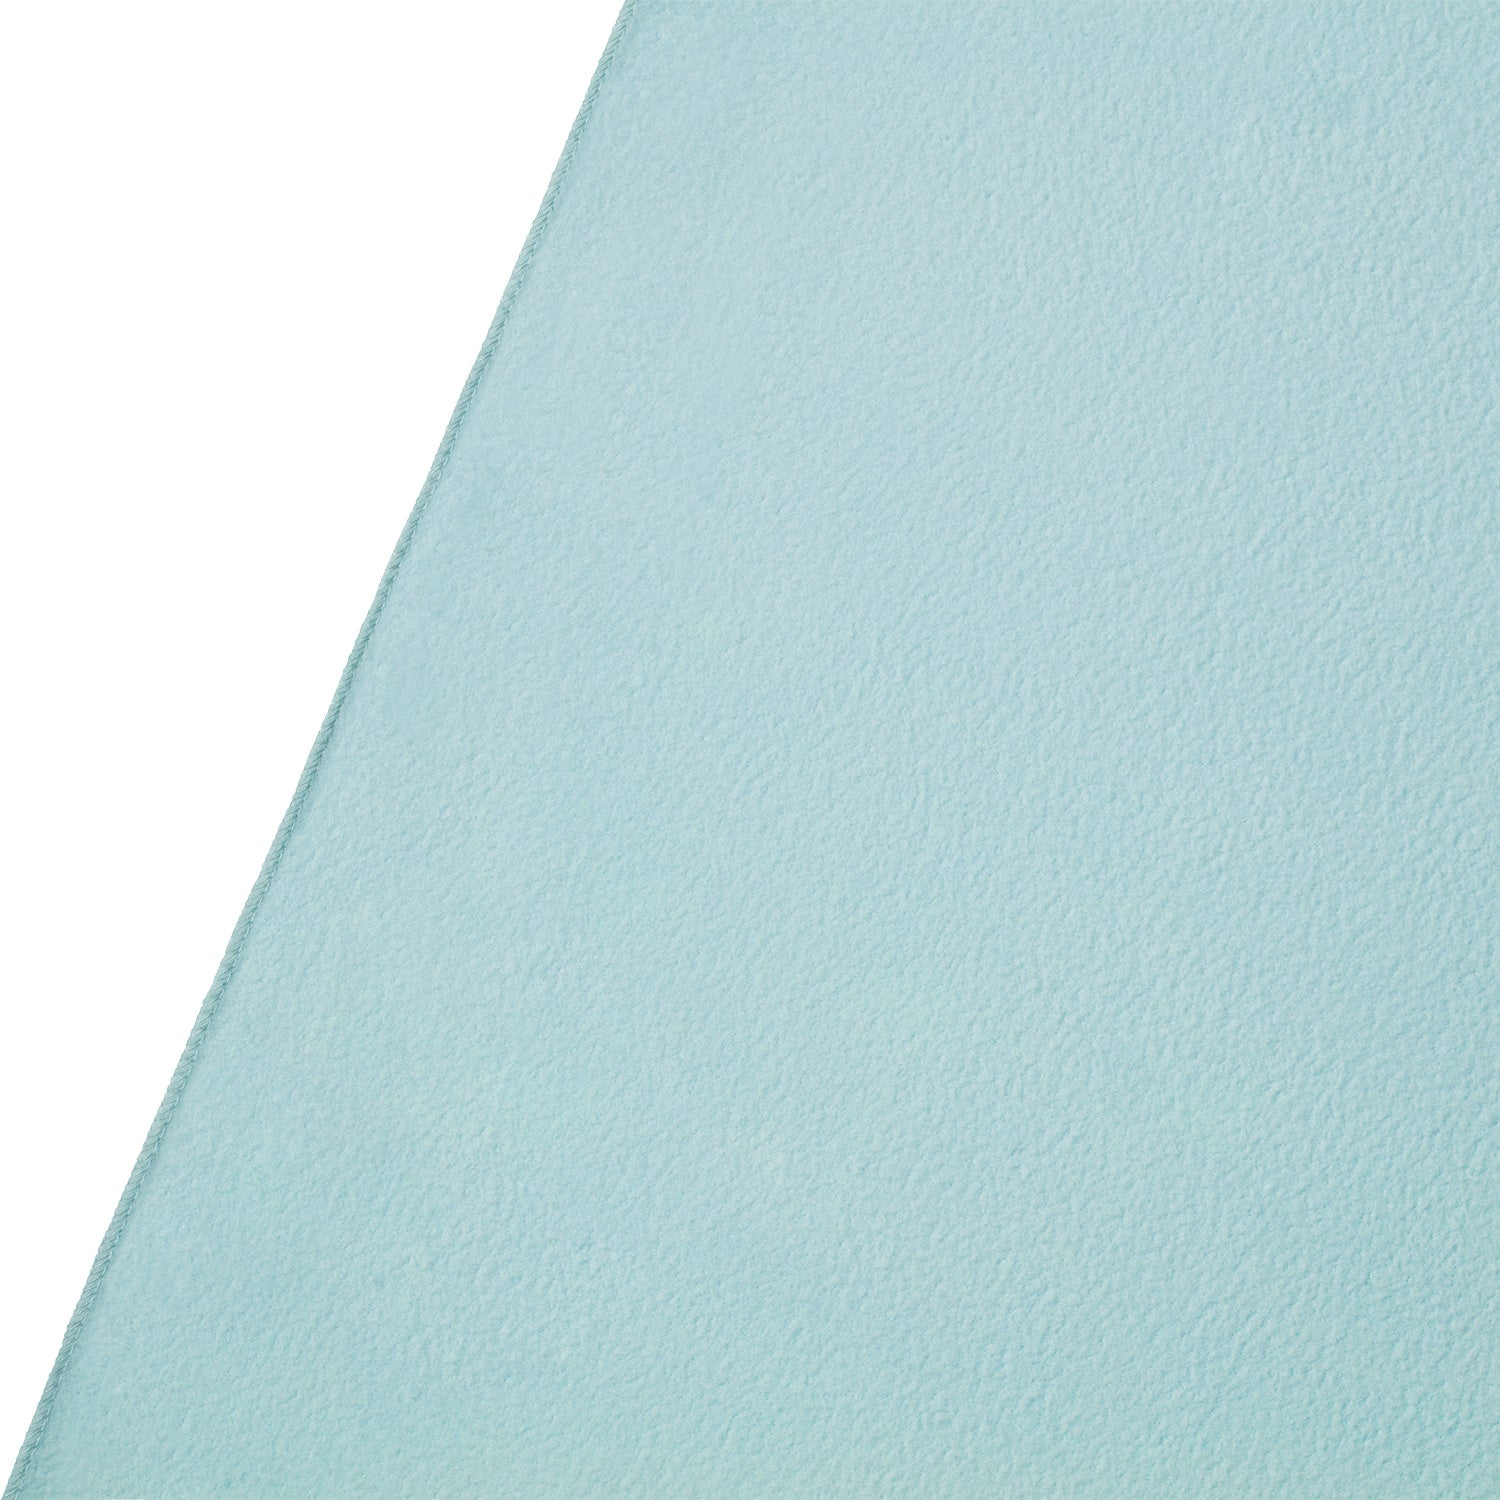 X-Drop Pro Wrinkle-Resistant Backdrop - Pastel Blue (8' x 8')